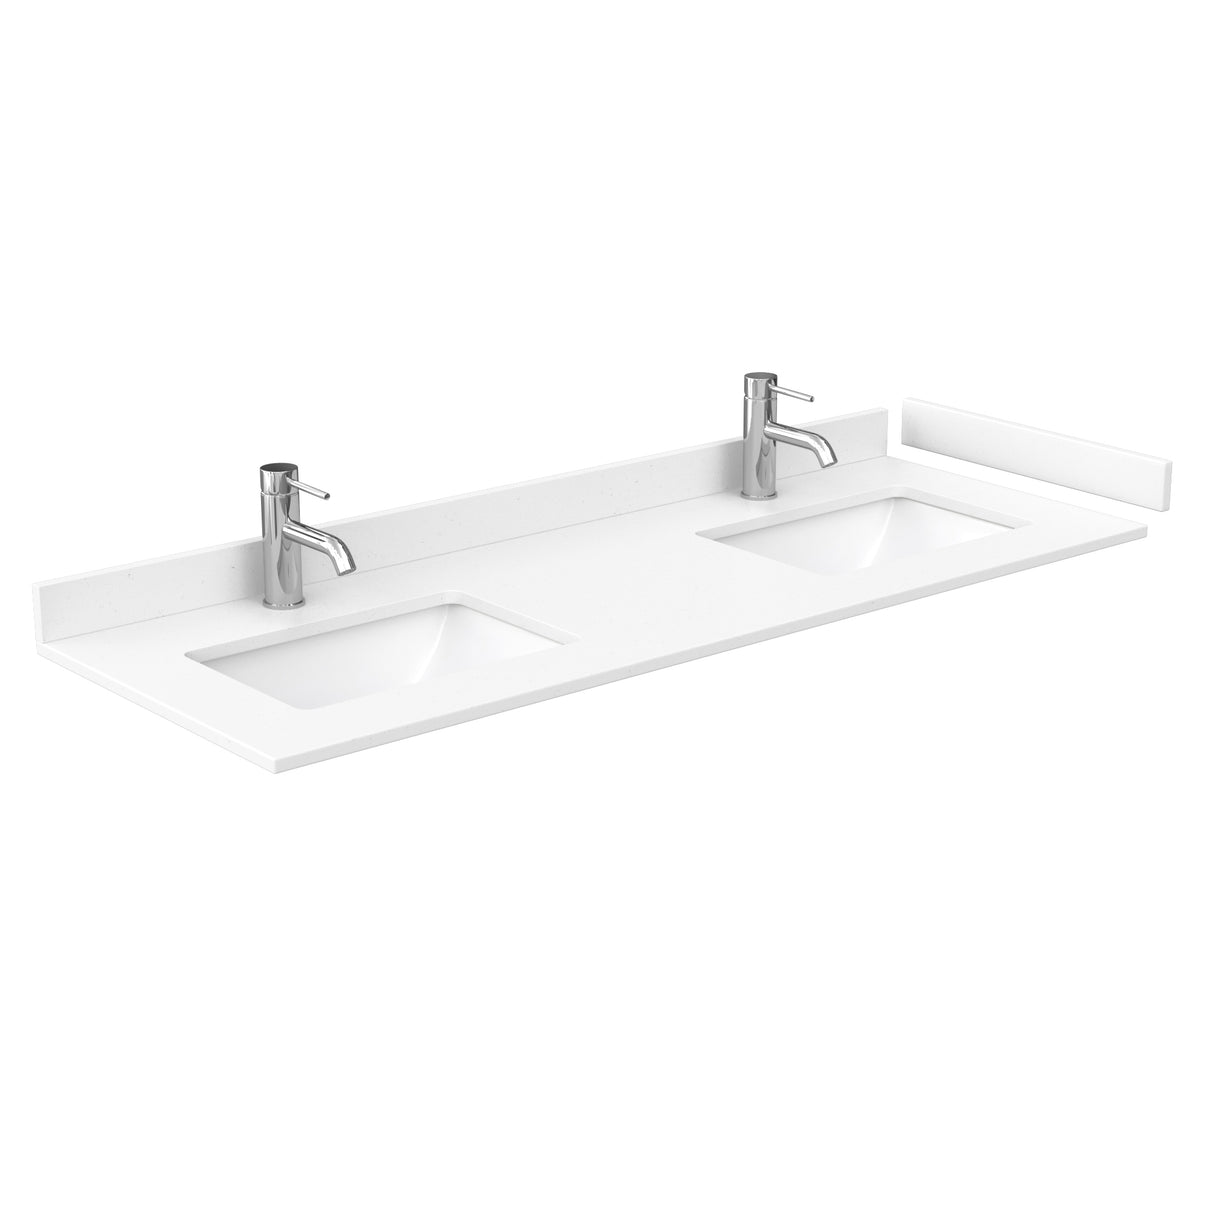 Daria 60 Inch Double Bathroom Vanity in Dark Gray White Cultured Marble Countertop Undermount Square Sinks No Mirror